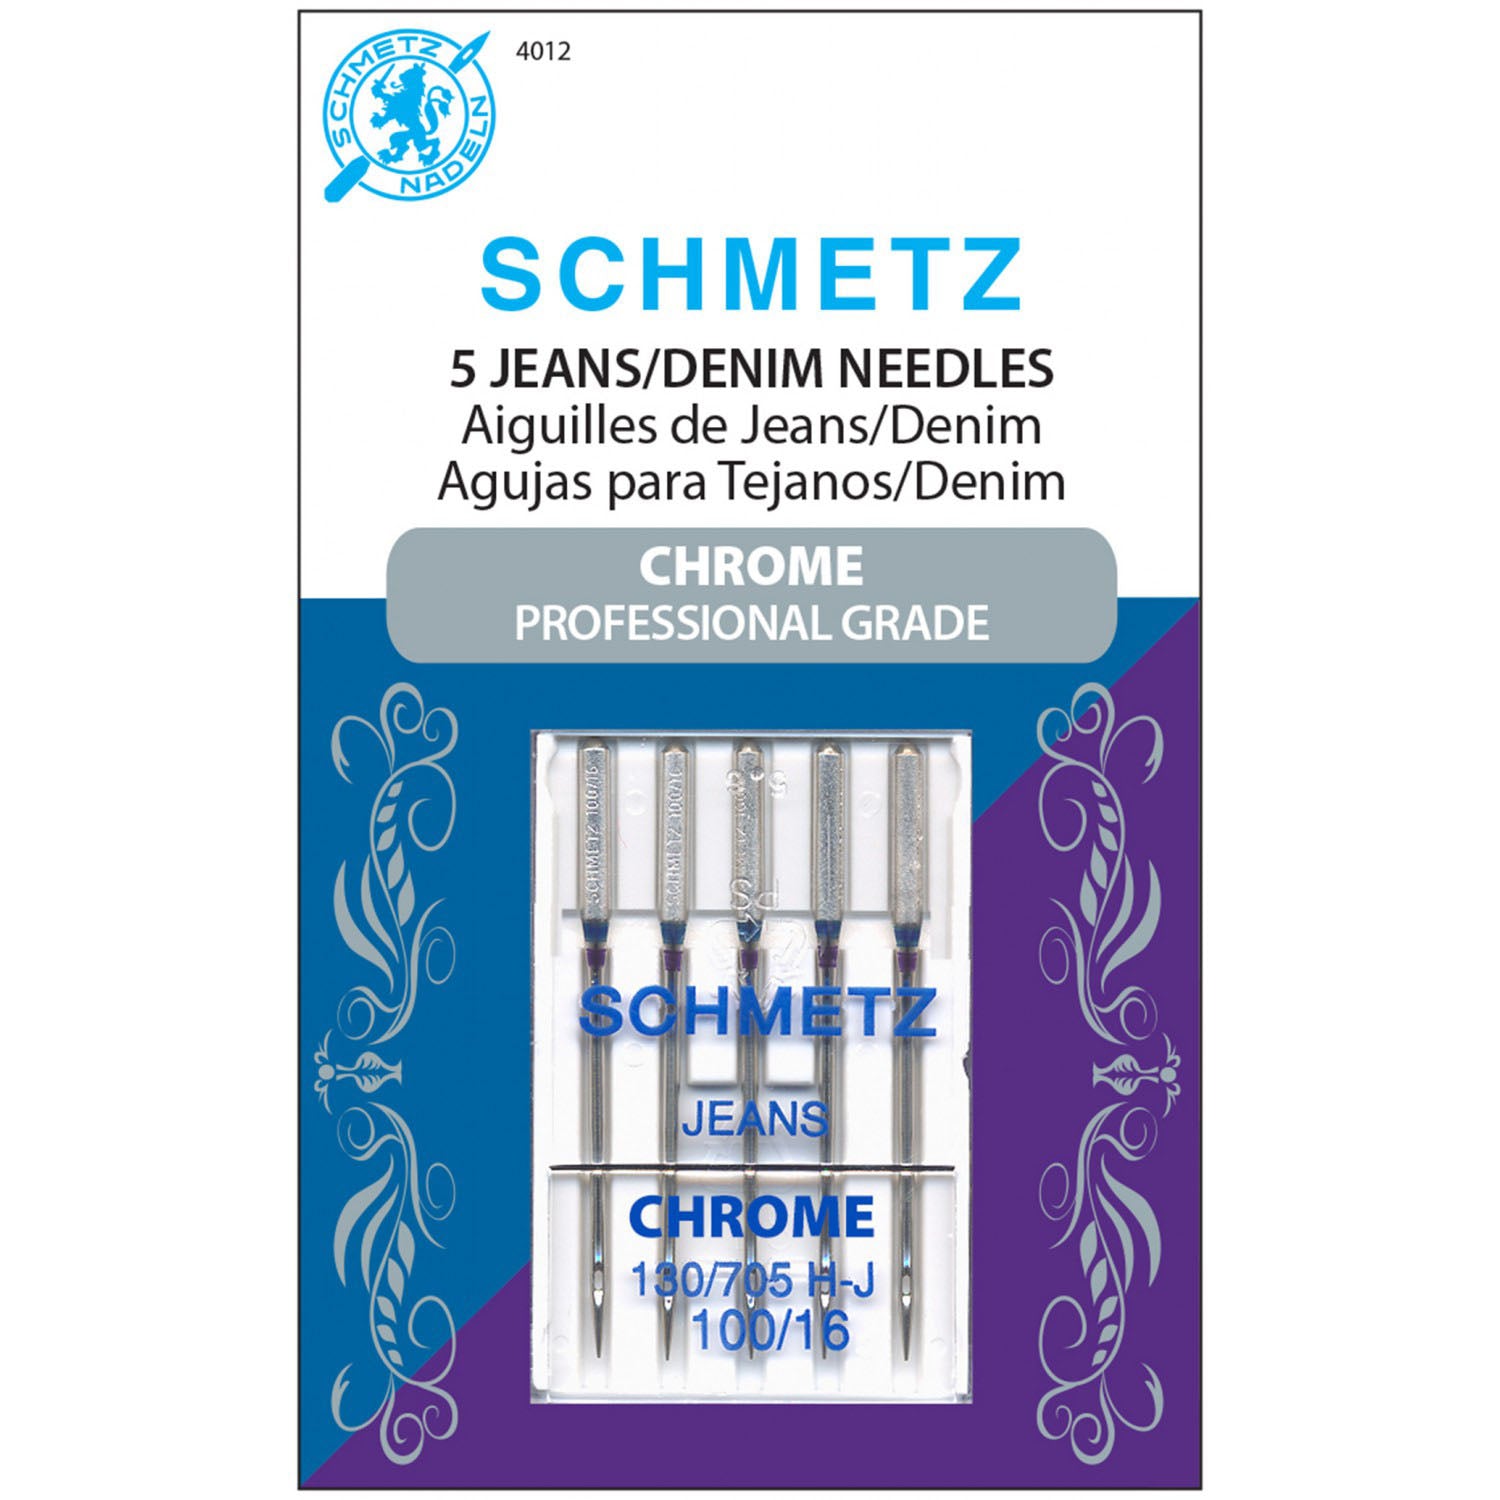 Schmetz Chrome Denim Needles - 100/16